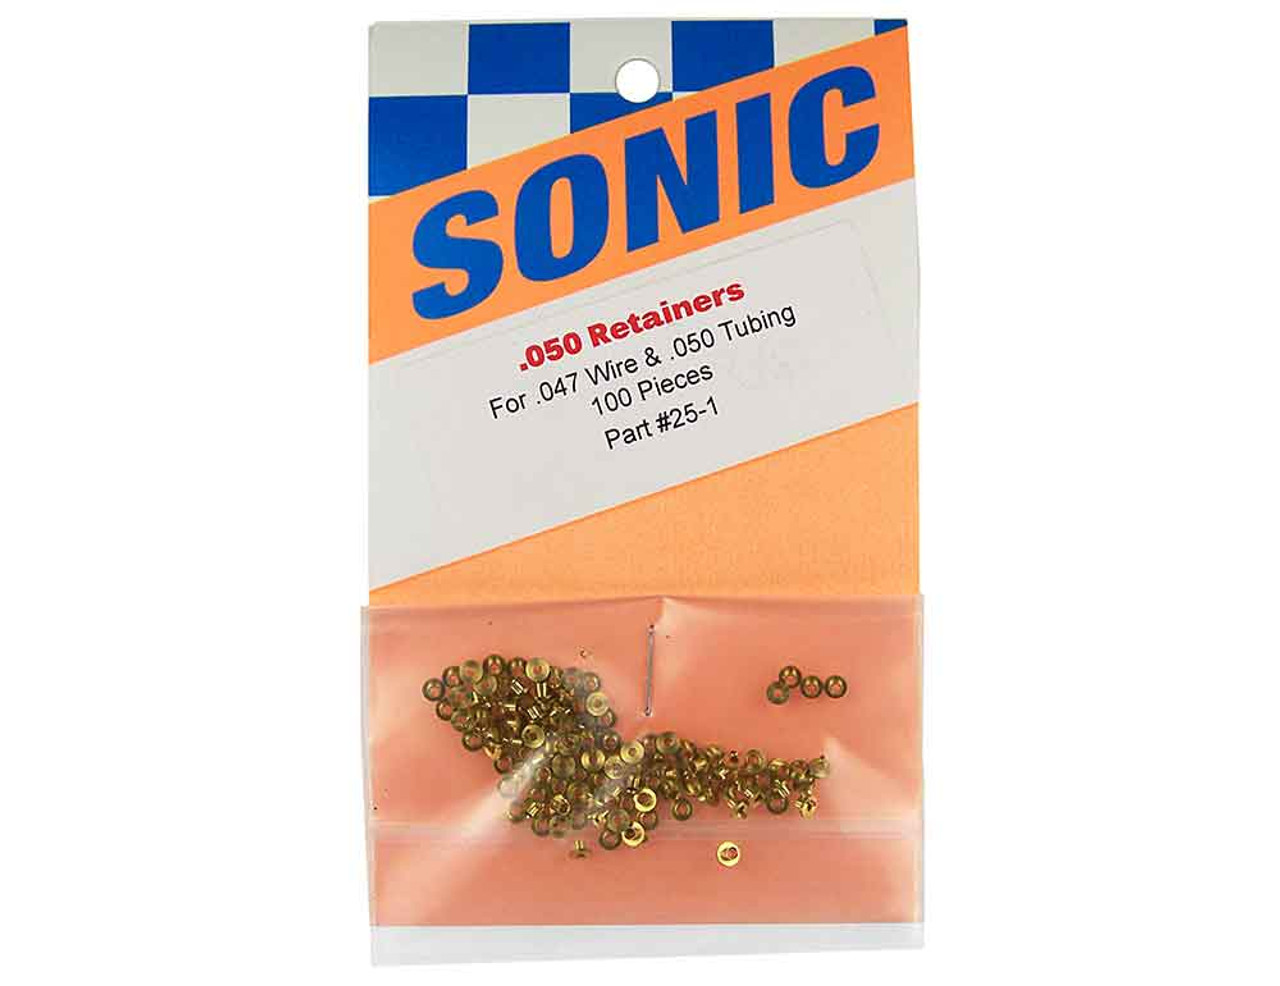 Sonic .050 Retainers - SON-25-1